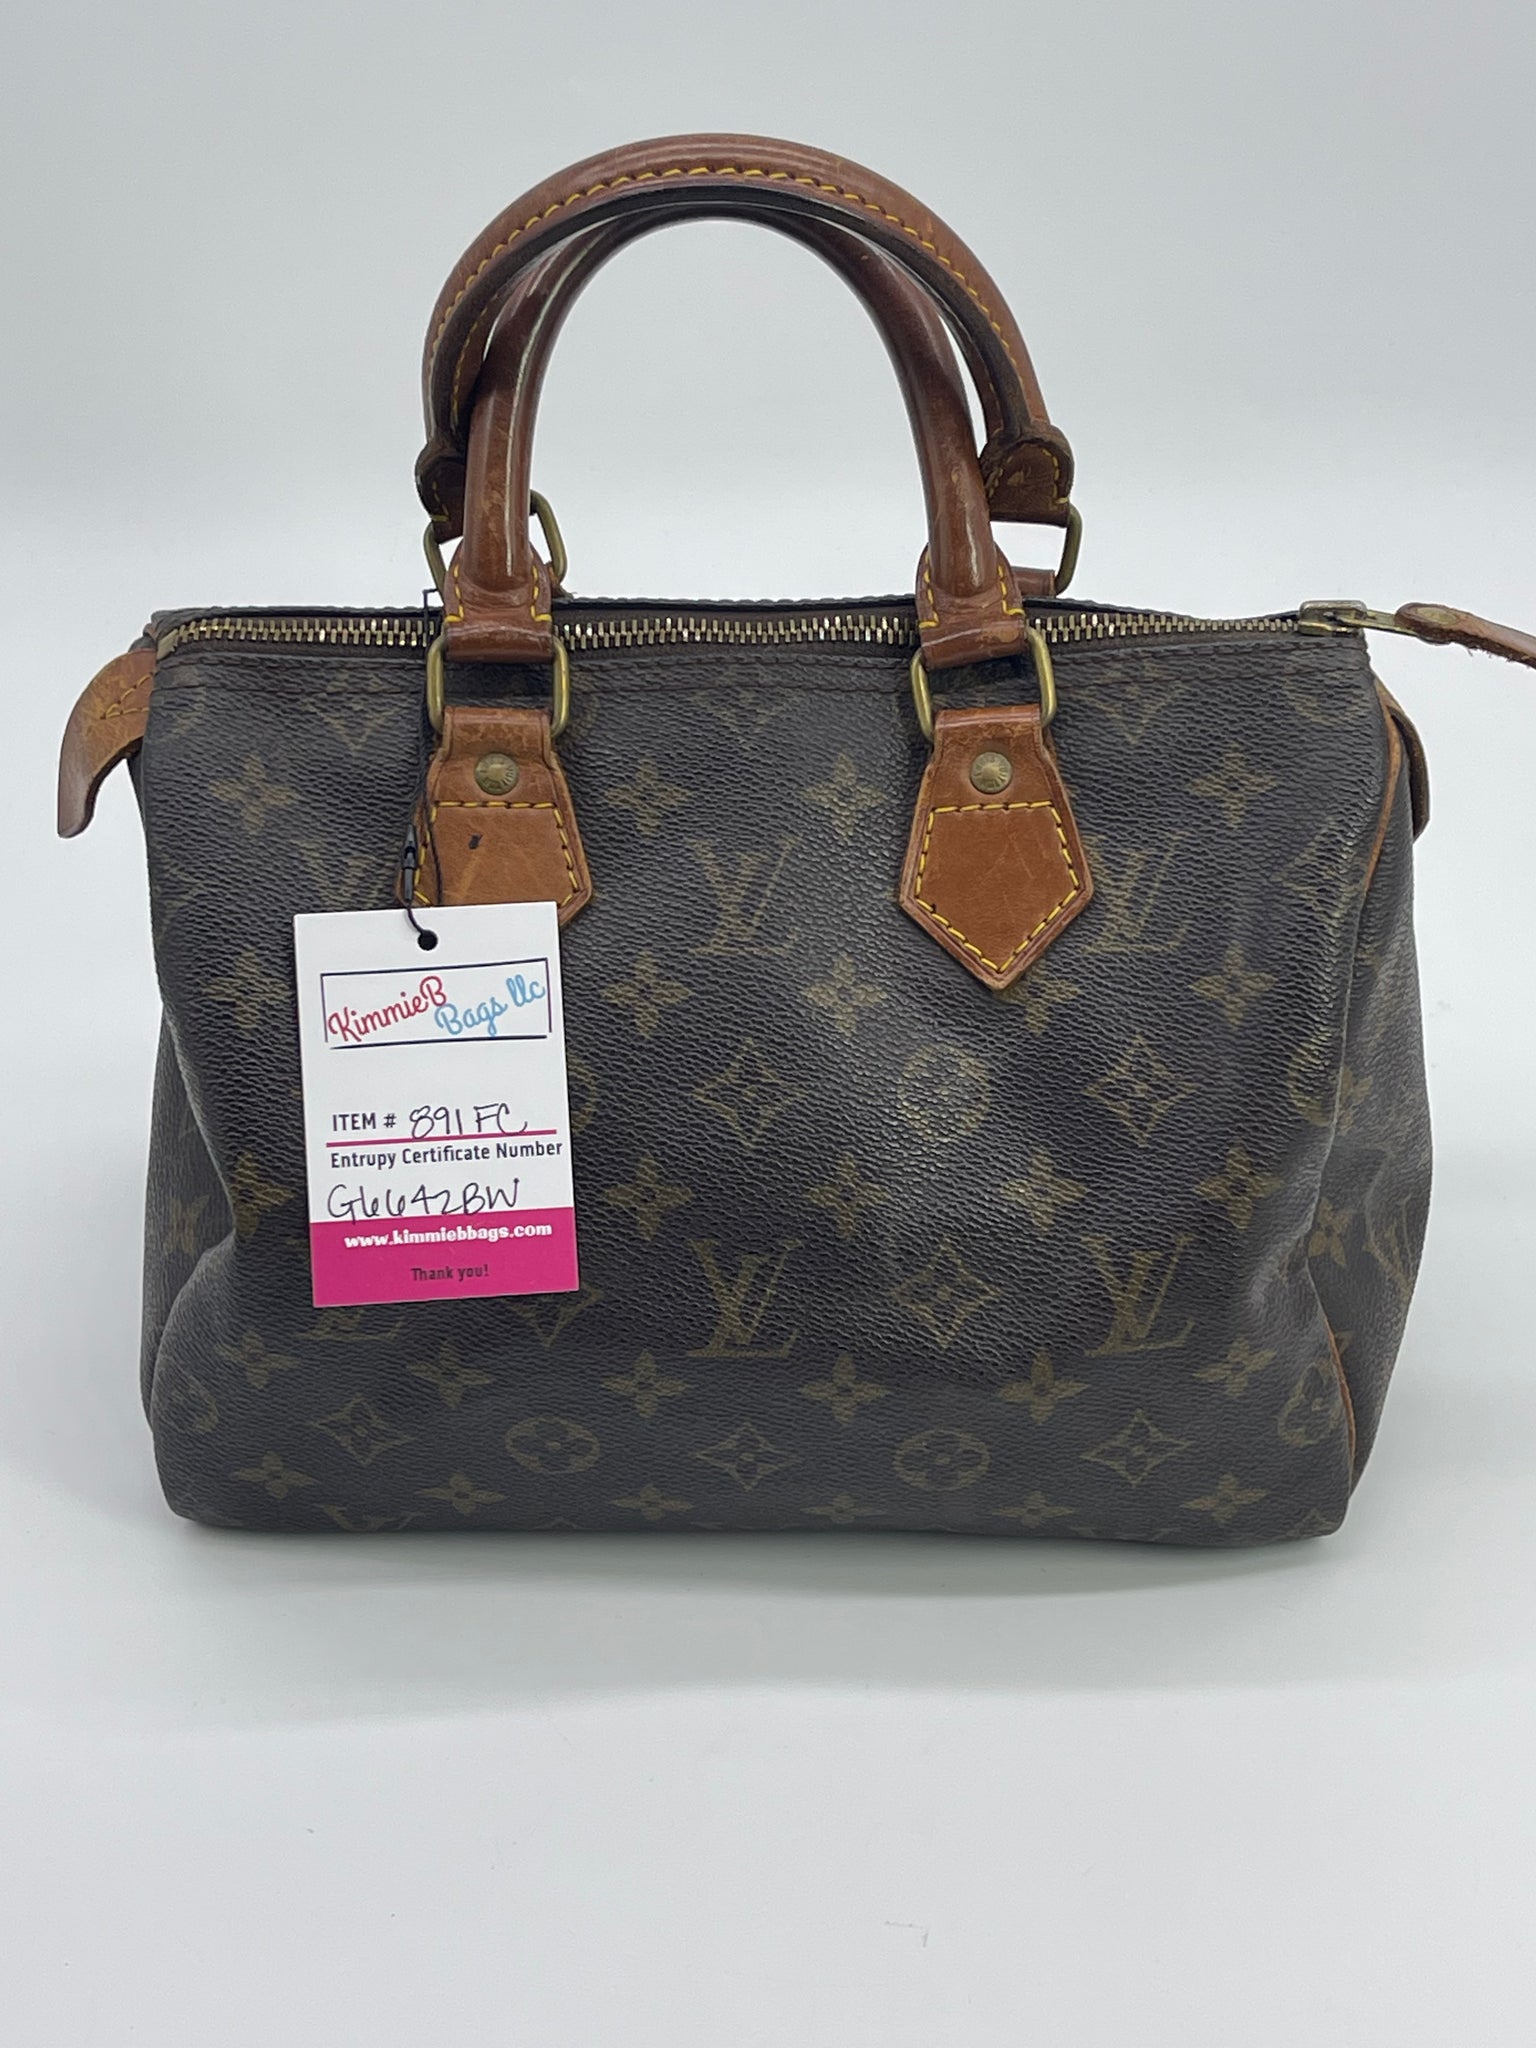 Personalized Louis Vuitton Speedy 25 / Louis Vuitton Perfect for me!!! <3